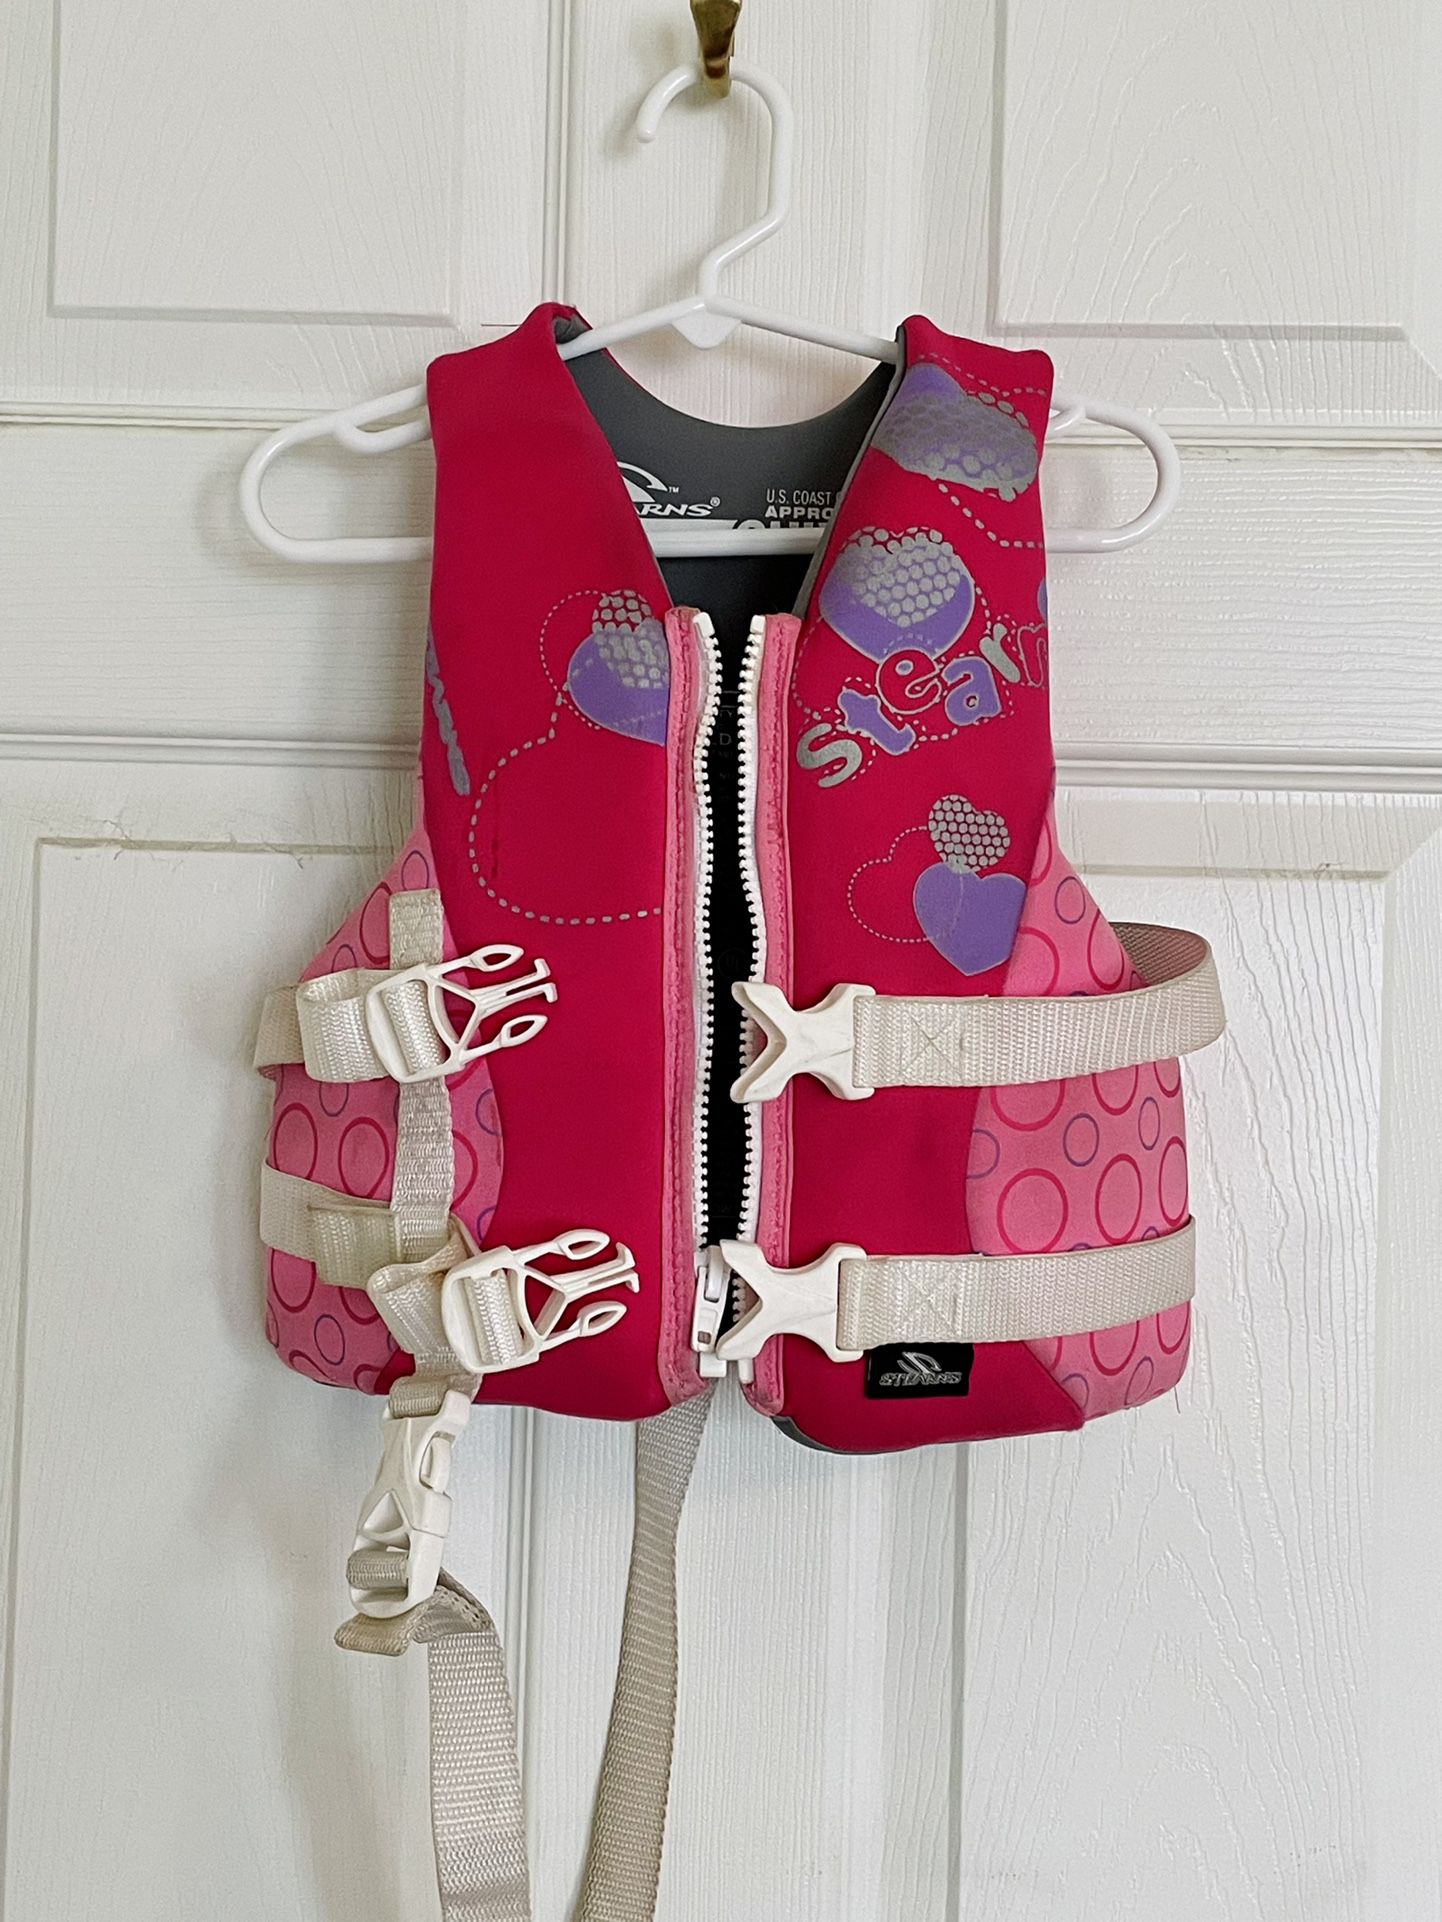 Life vest / Life jacket Child 30 - 50 lbs